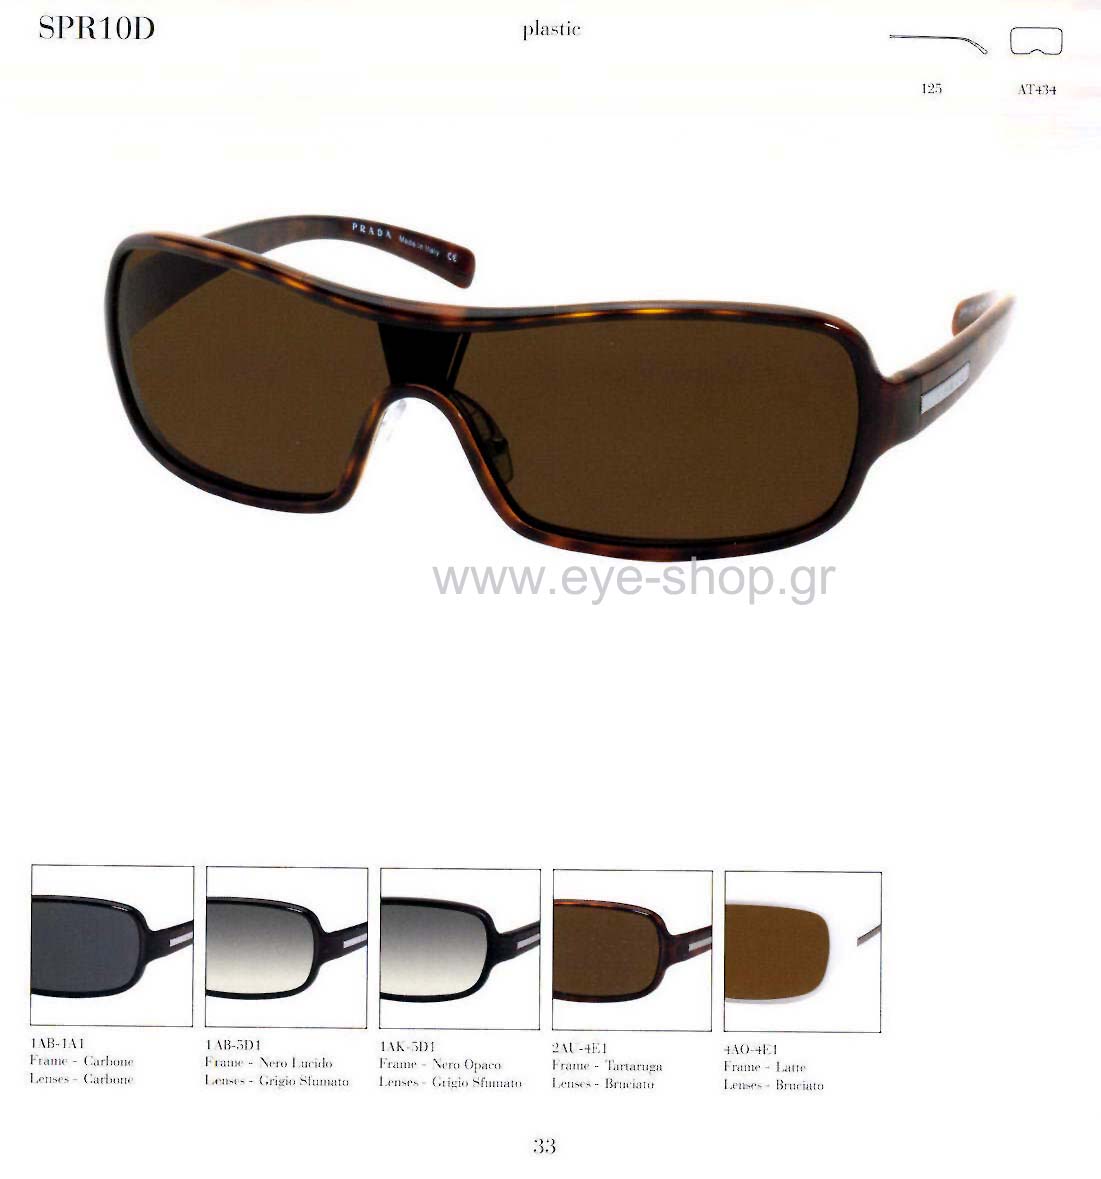 Sunglasses Prada SPR10D 1AK-5D1 Σκελετός μαύρο ματ, μάσκα γκρι degradee